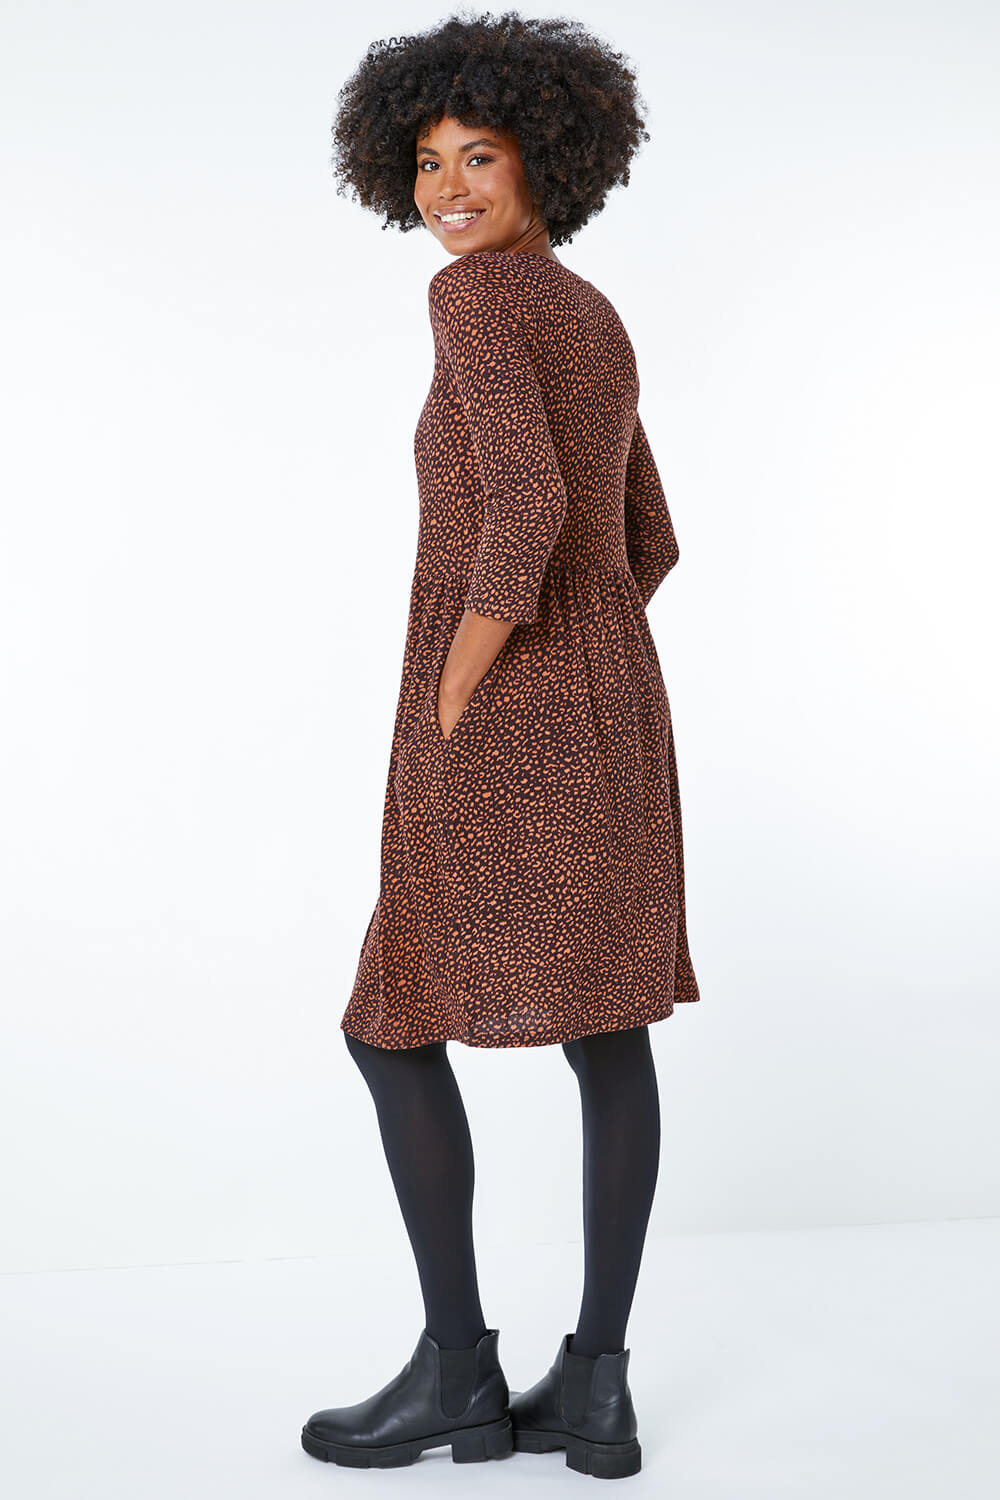 Bronze Leopard Print Stretch Dress, Image 3 of 5